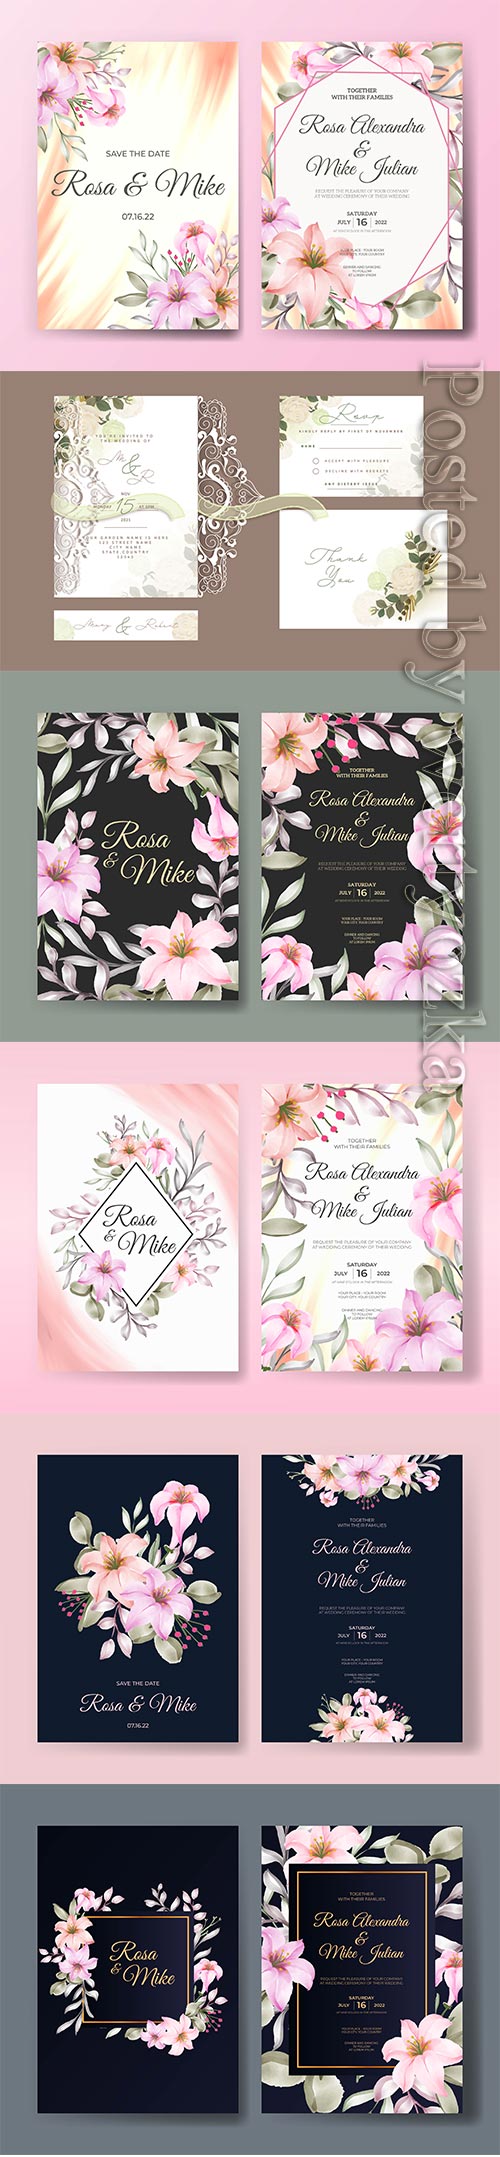 Wedding card set with beautiful design